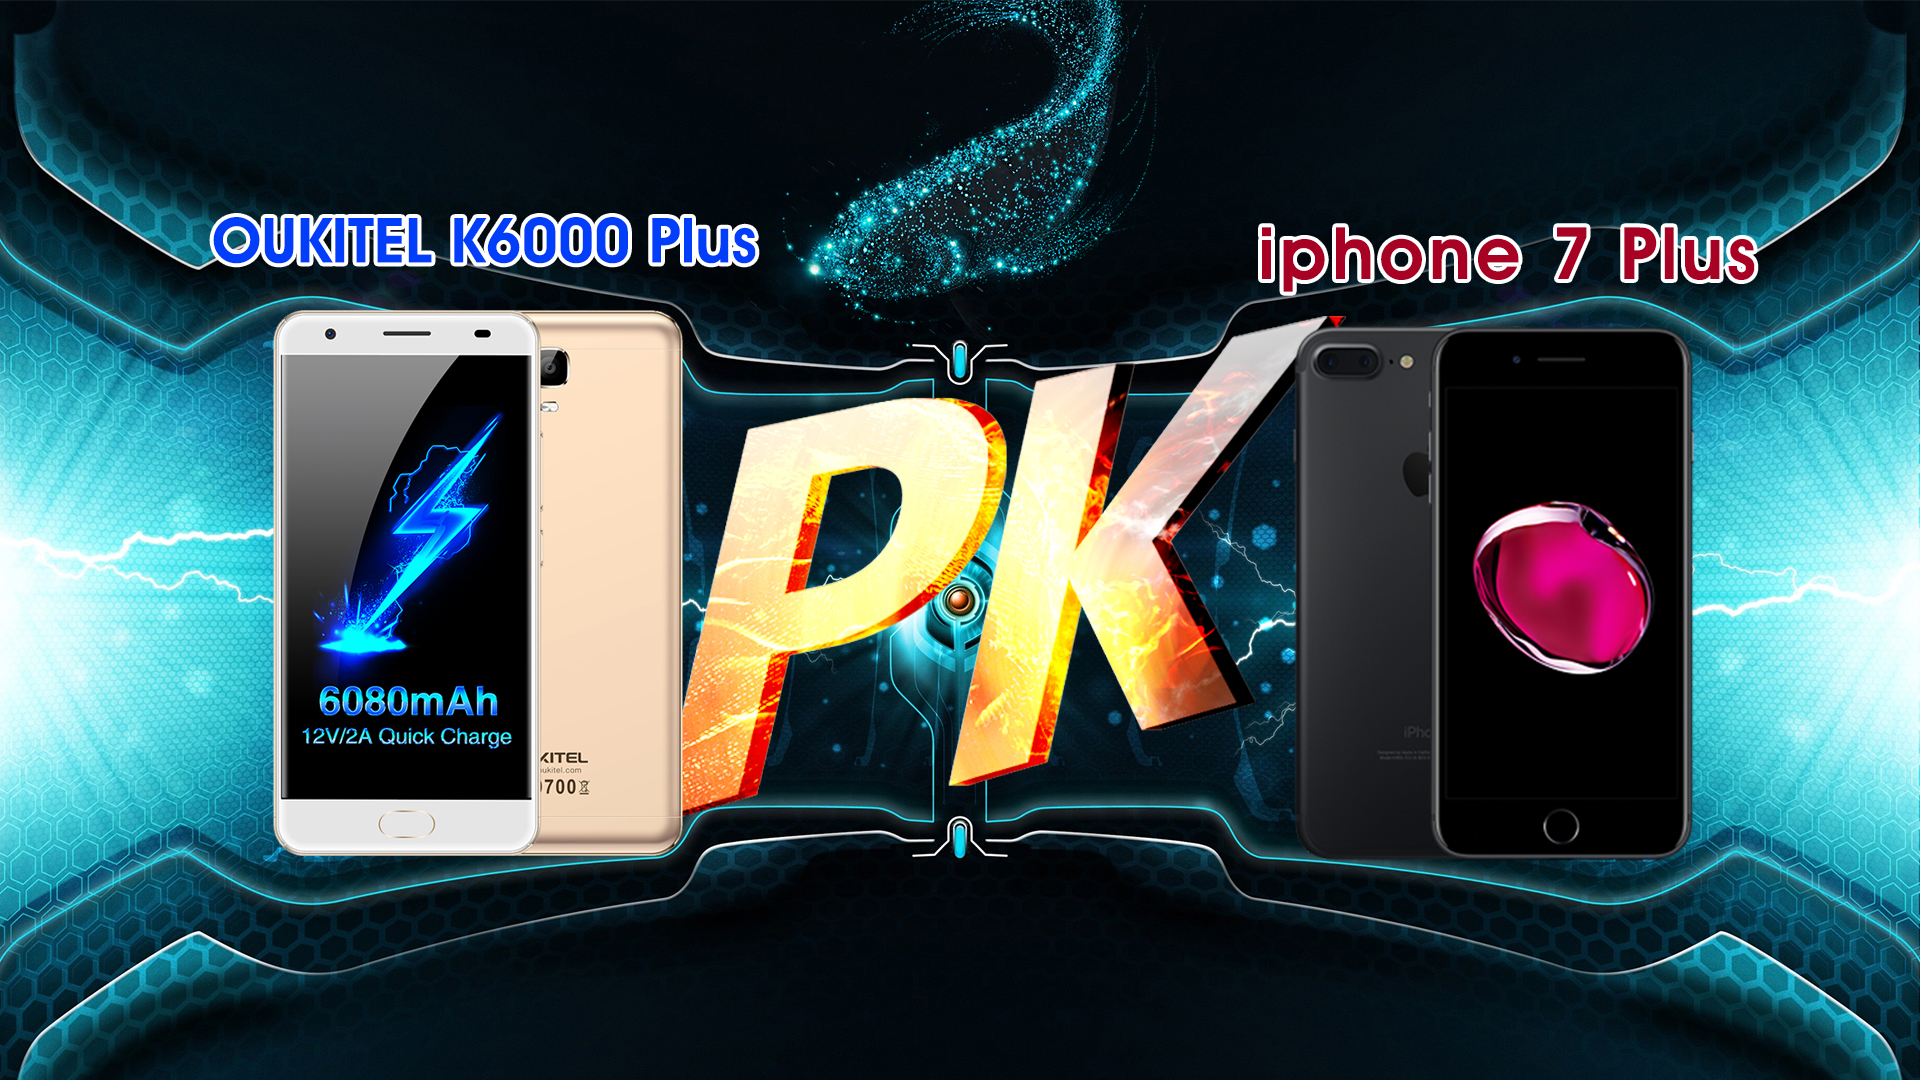 OUKITEL K6000 Plus 7 Plus vs iPhone: who wins?